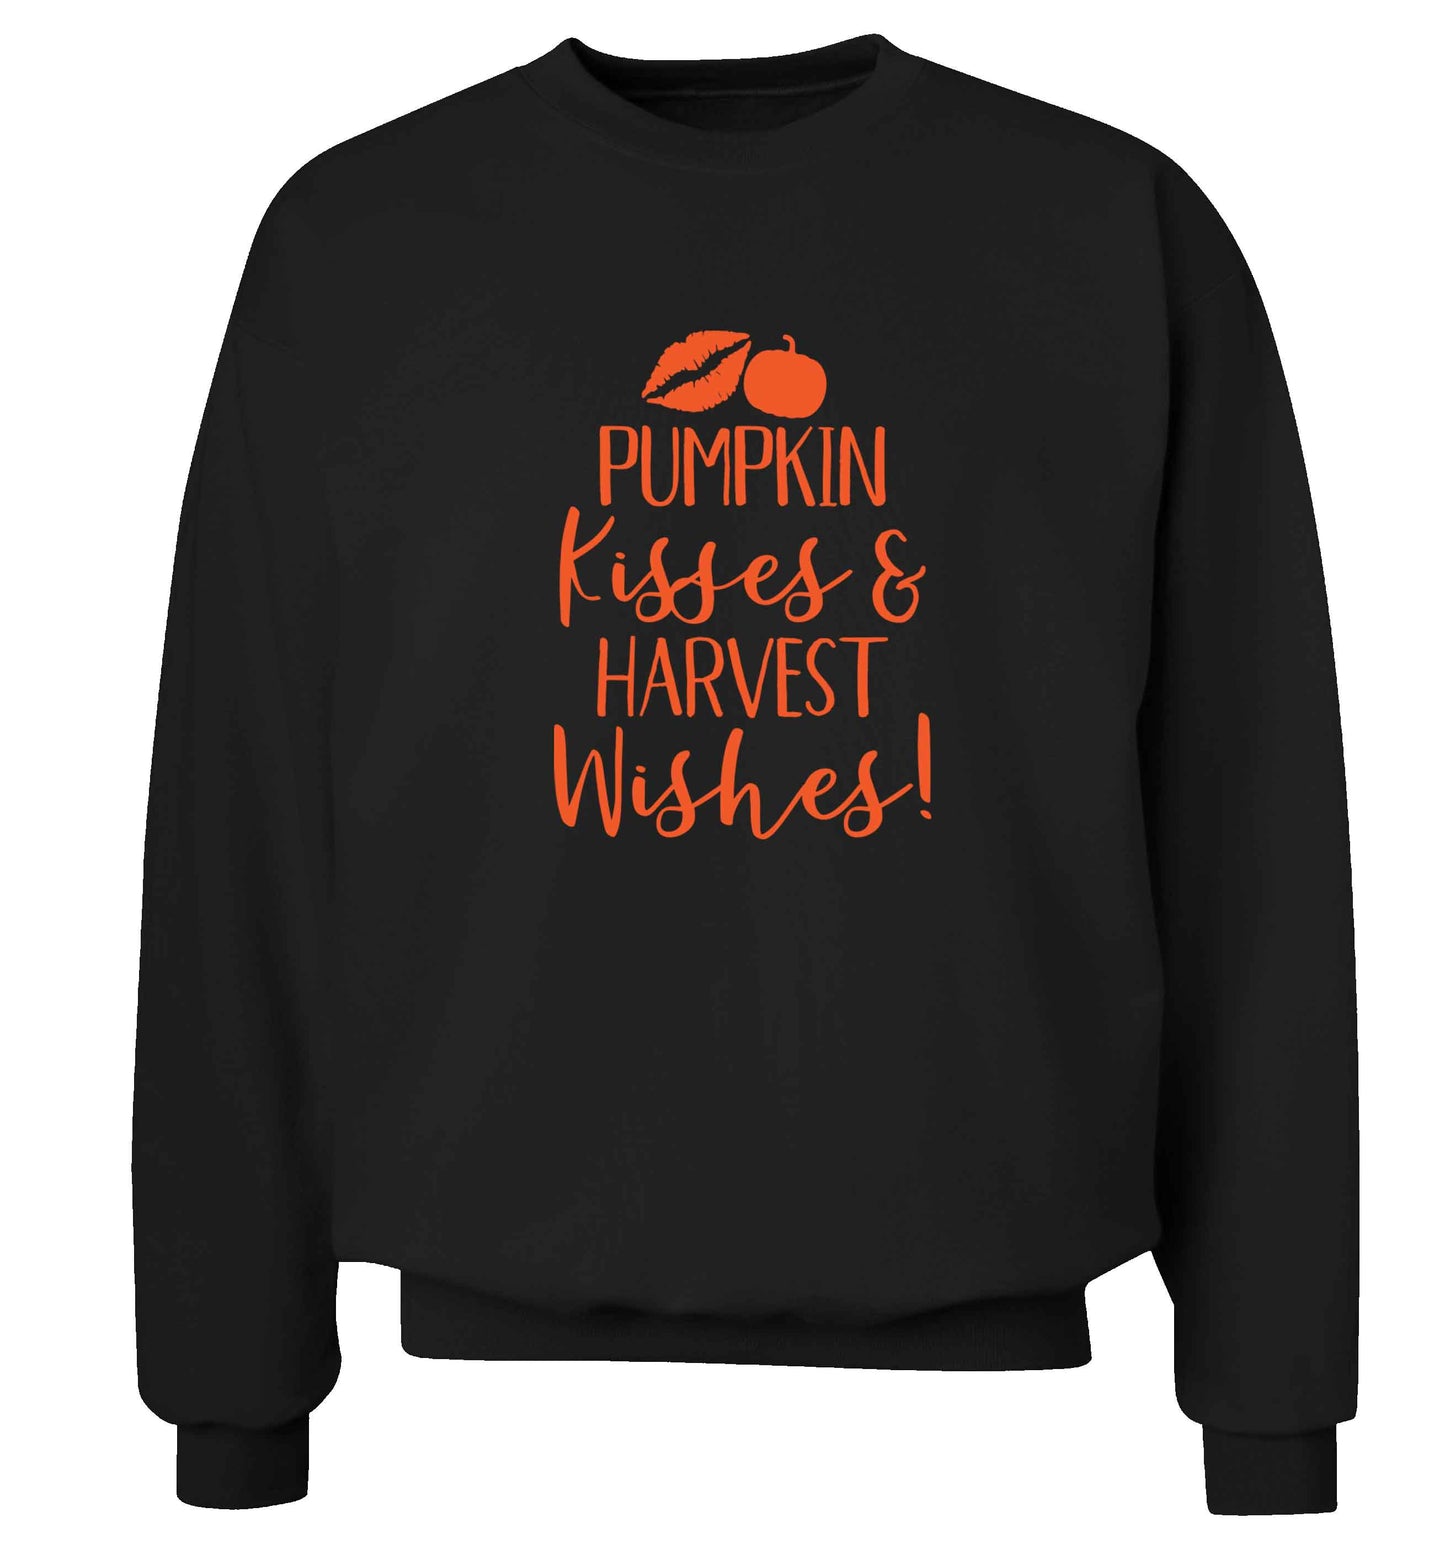 Pumpkin Kisses Harvest adult's unisex black sweater 2XL